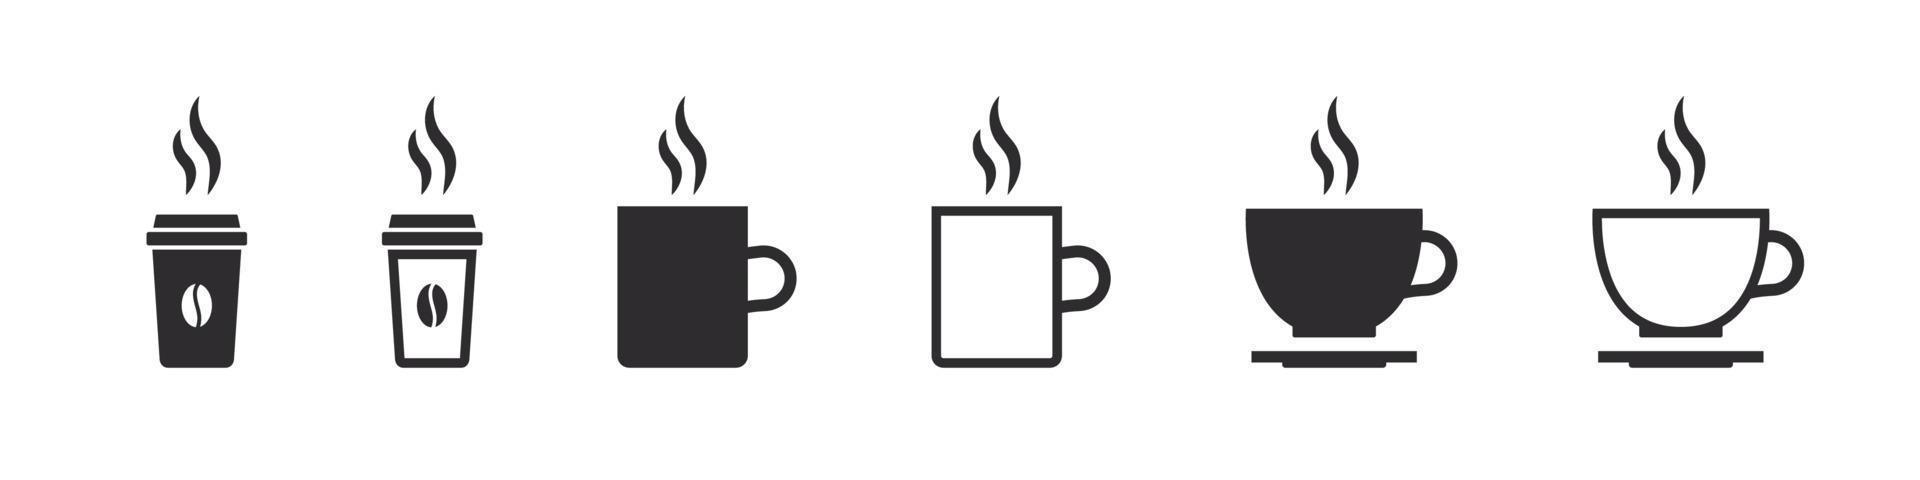 Kaffeetassen-Konzept. Symbole für Kaffeetassen. verschiedene Tassen Kaffee. Vektor-Illustration vektor